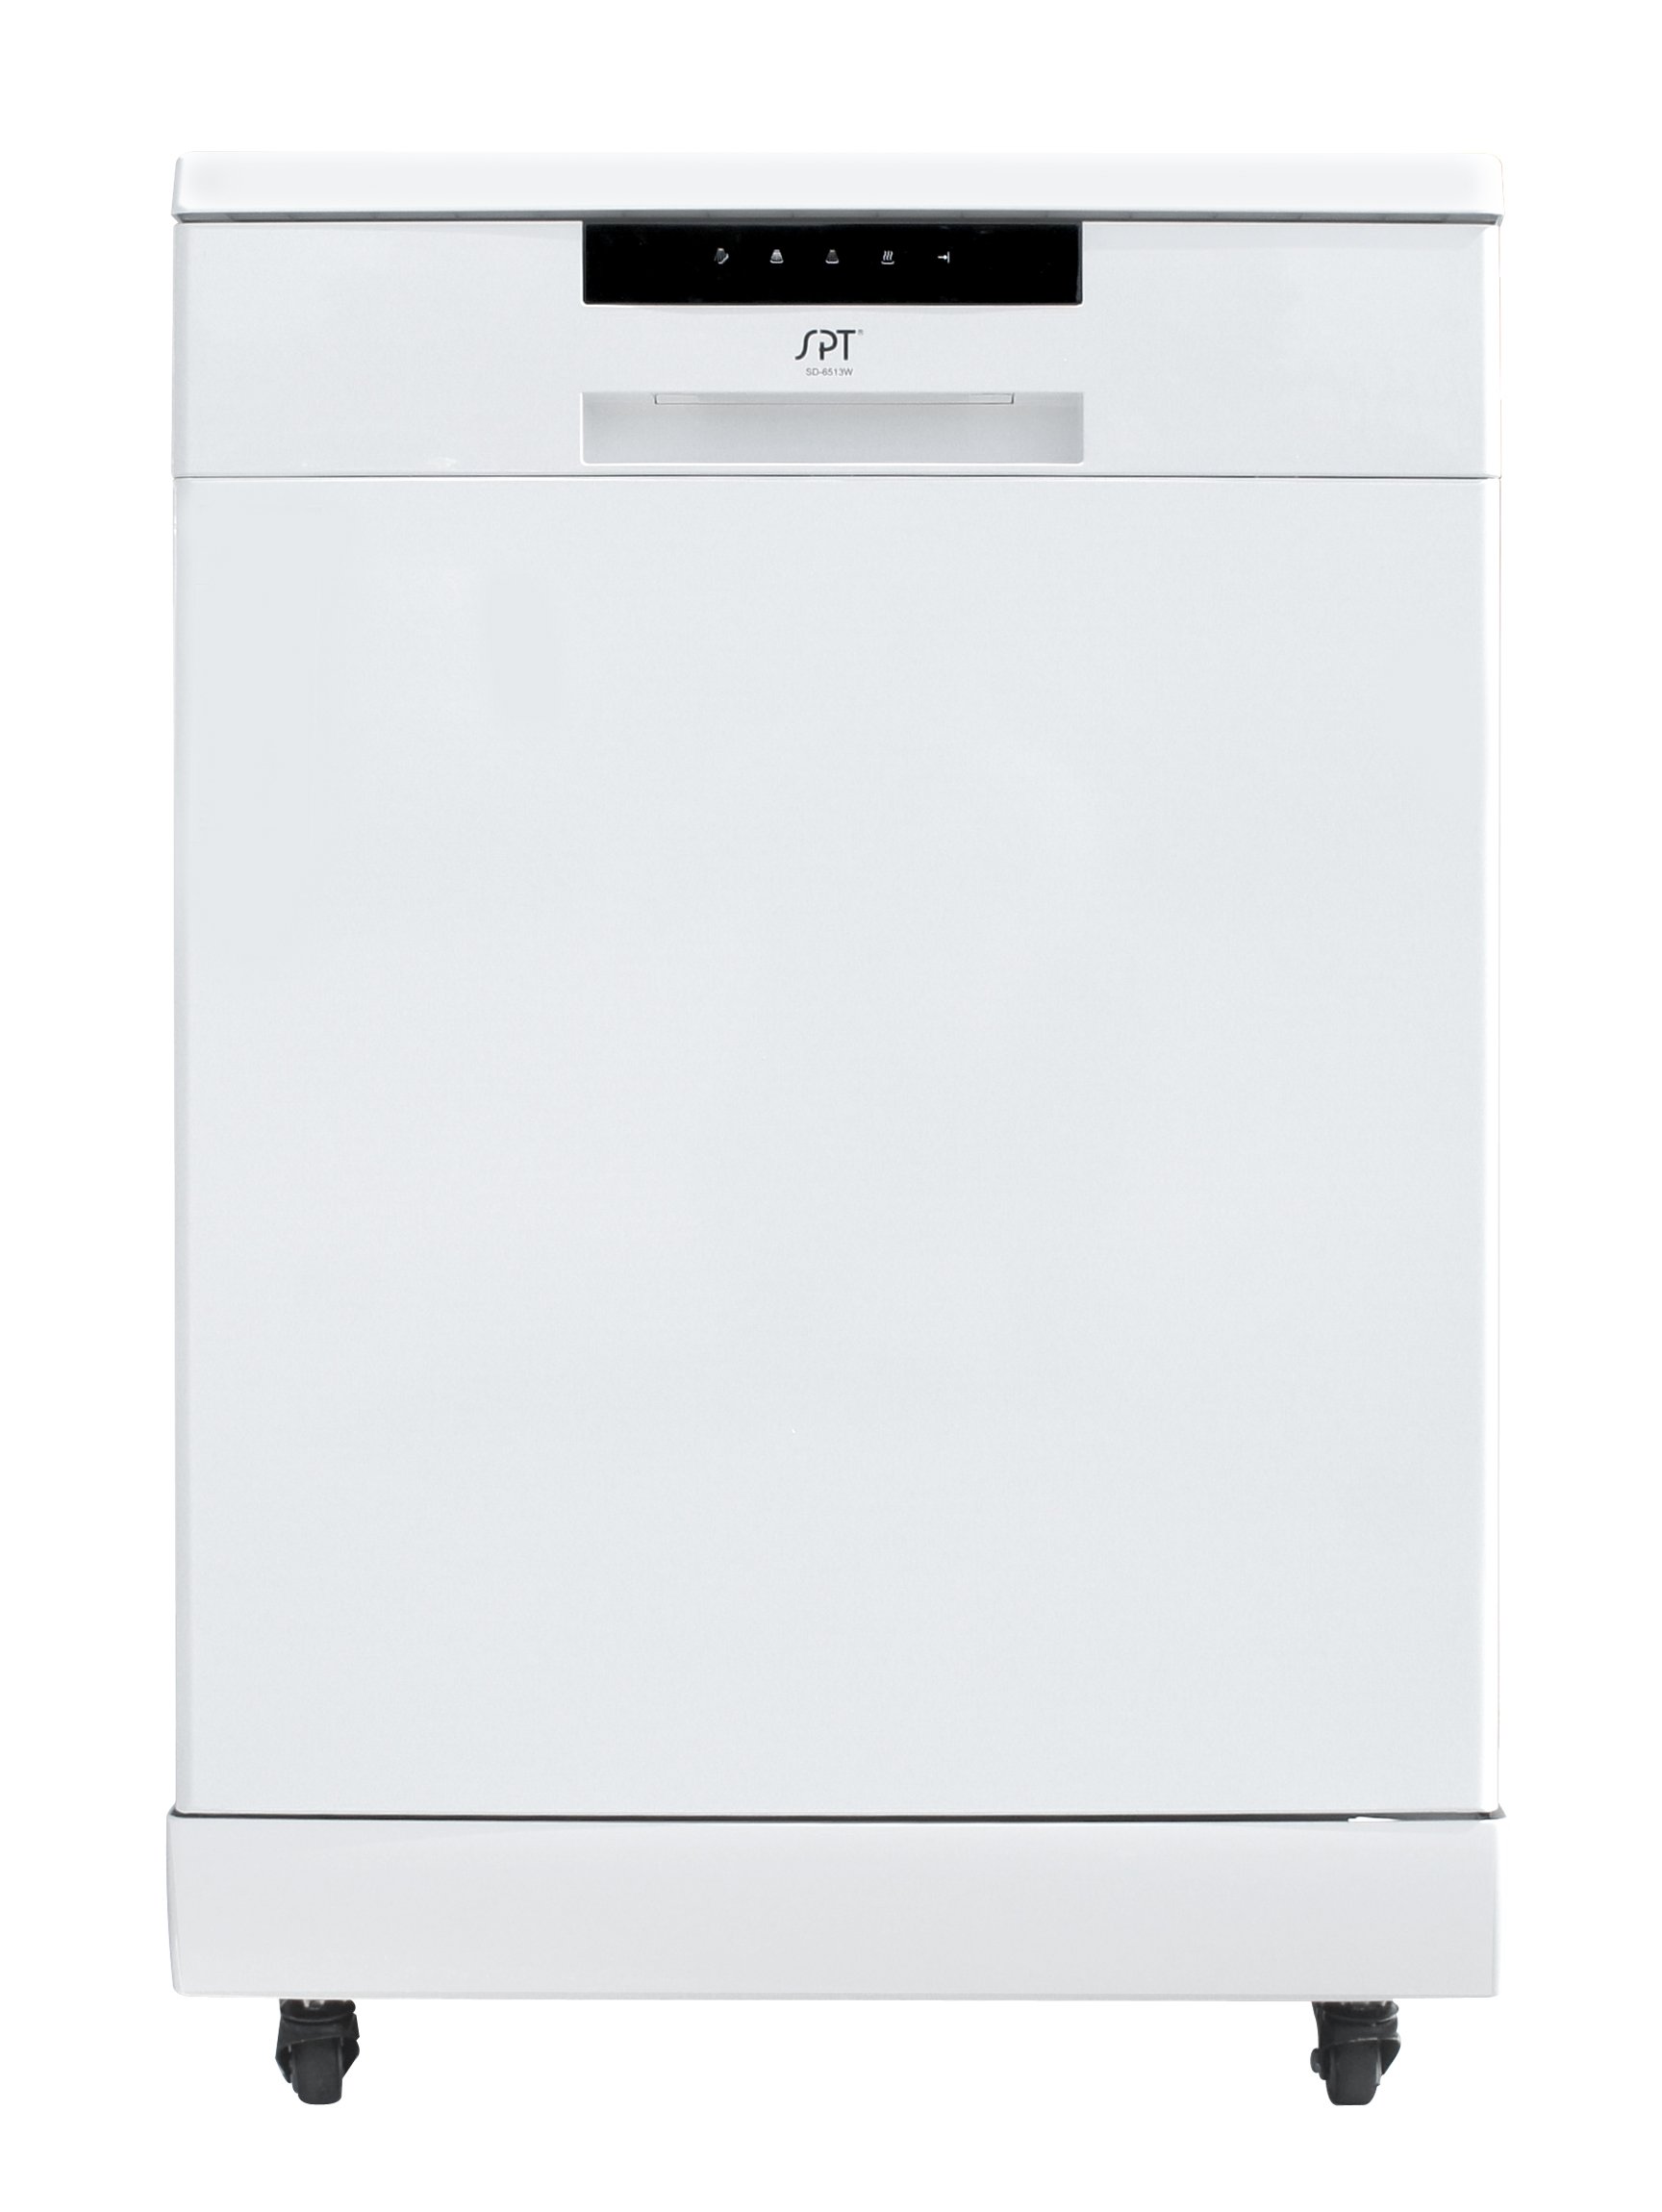 Sunpentown Energy Star 24" Portable Stainless Steel Dishwasher - White